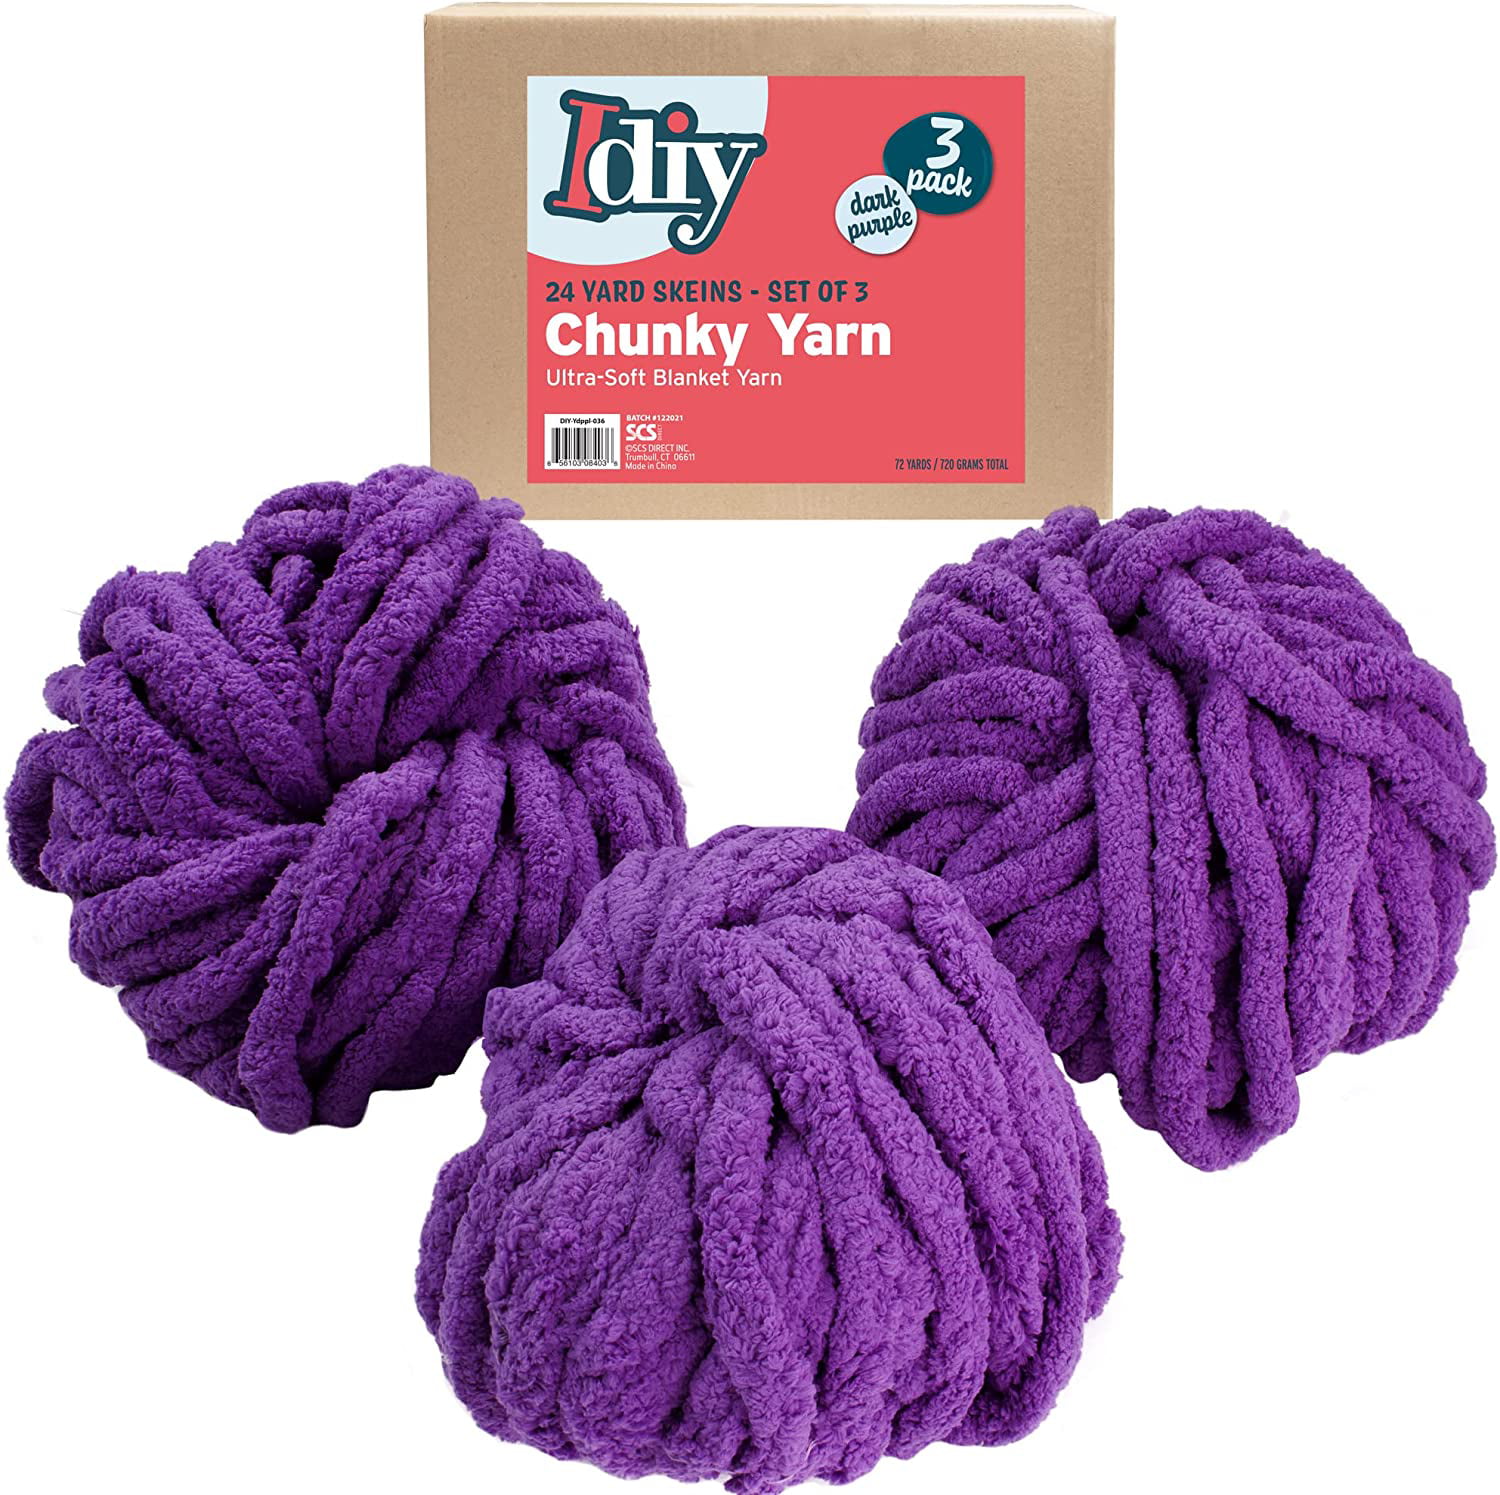 iDIY Chunky Yarn 3 Pack (24 Yards Each Skein) - Dark Purple - Fluffy  Chenille Yarn Perfect for Soft Throw and Baby Blankets, Arm Knitting,  Crocheting